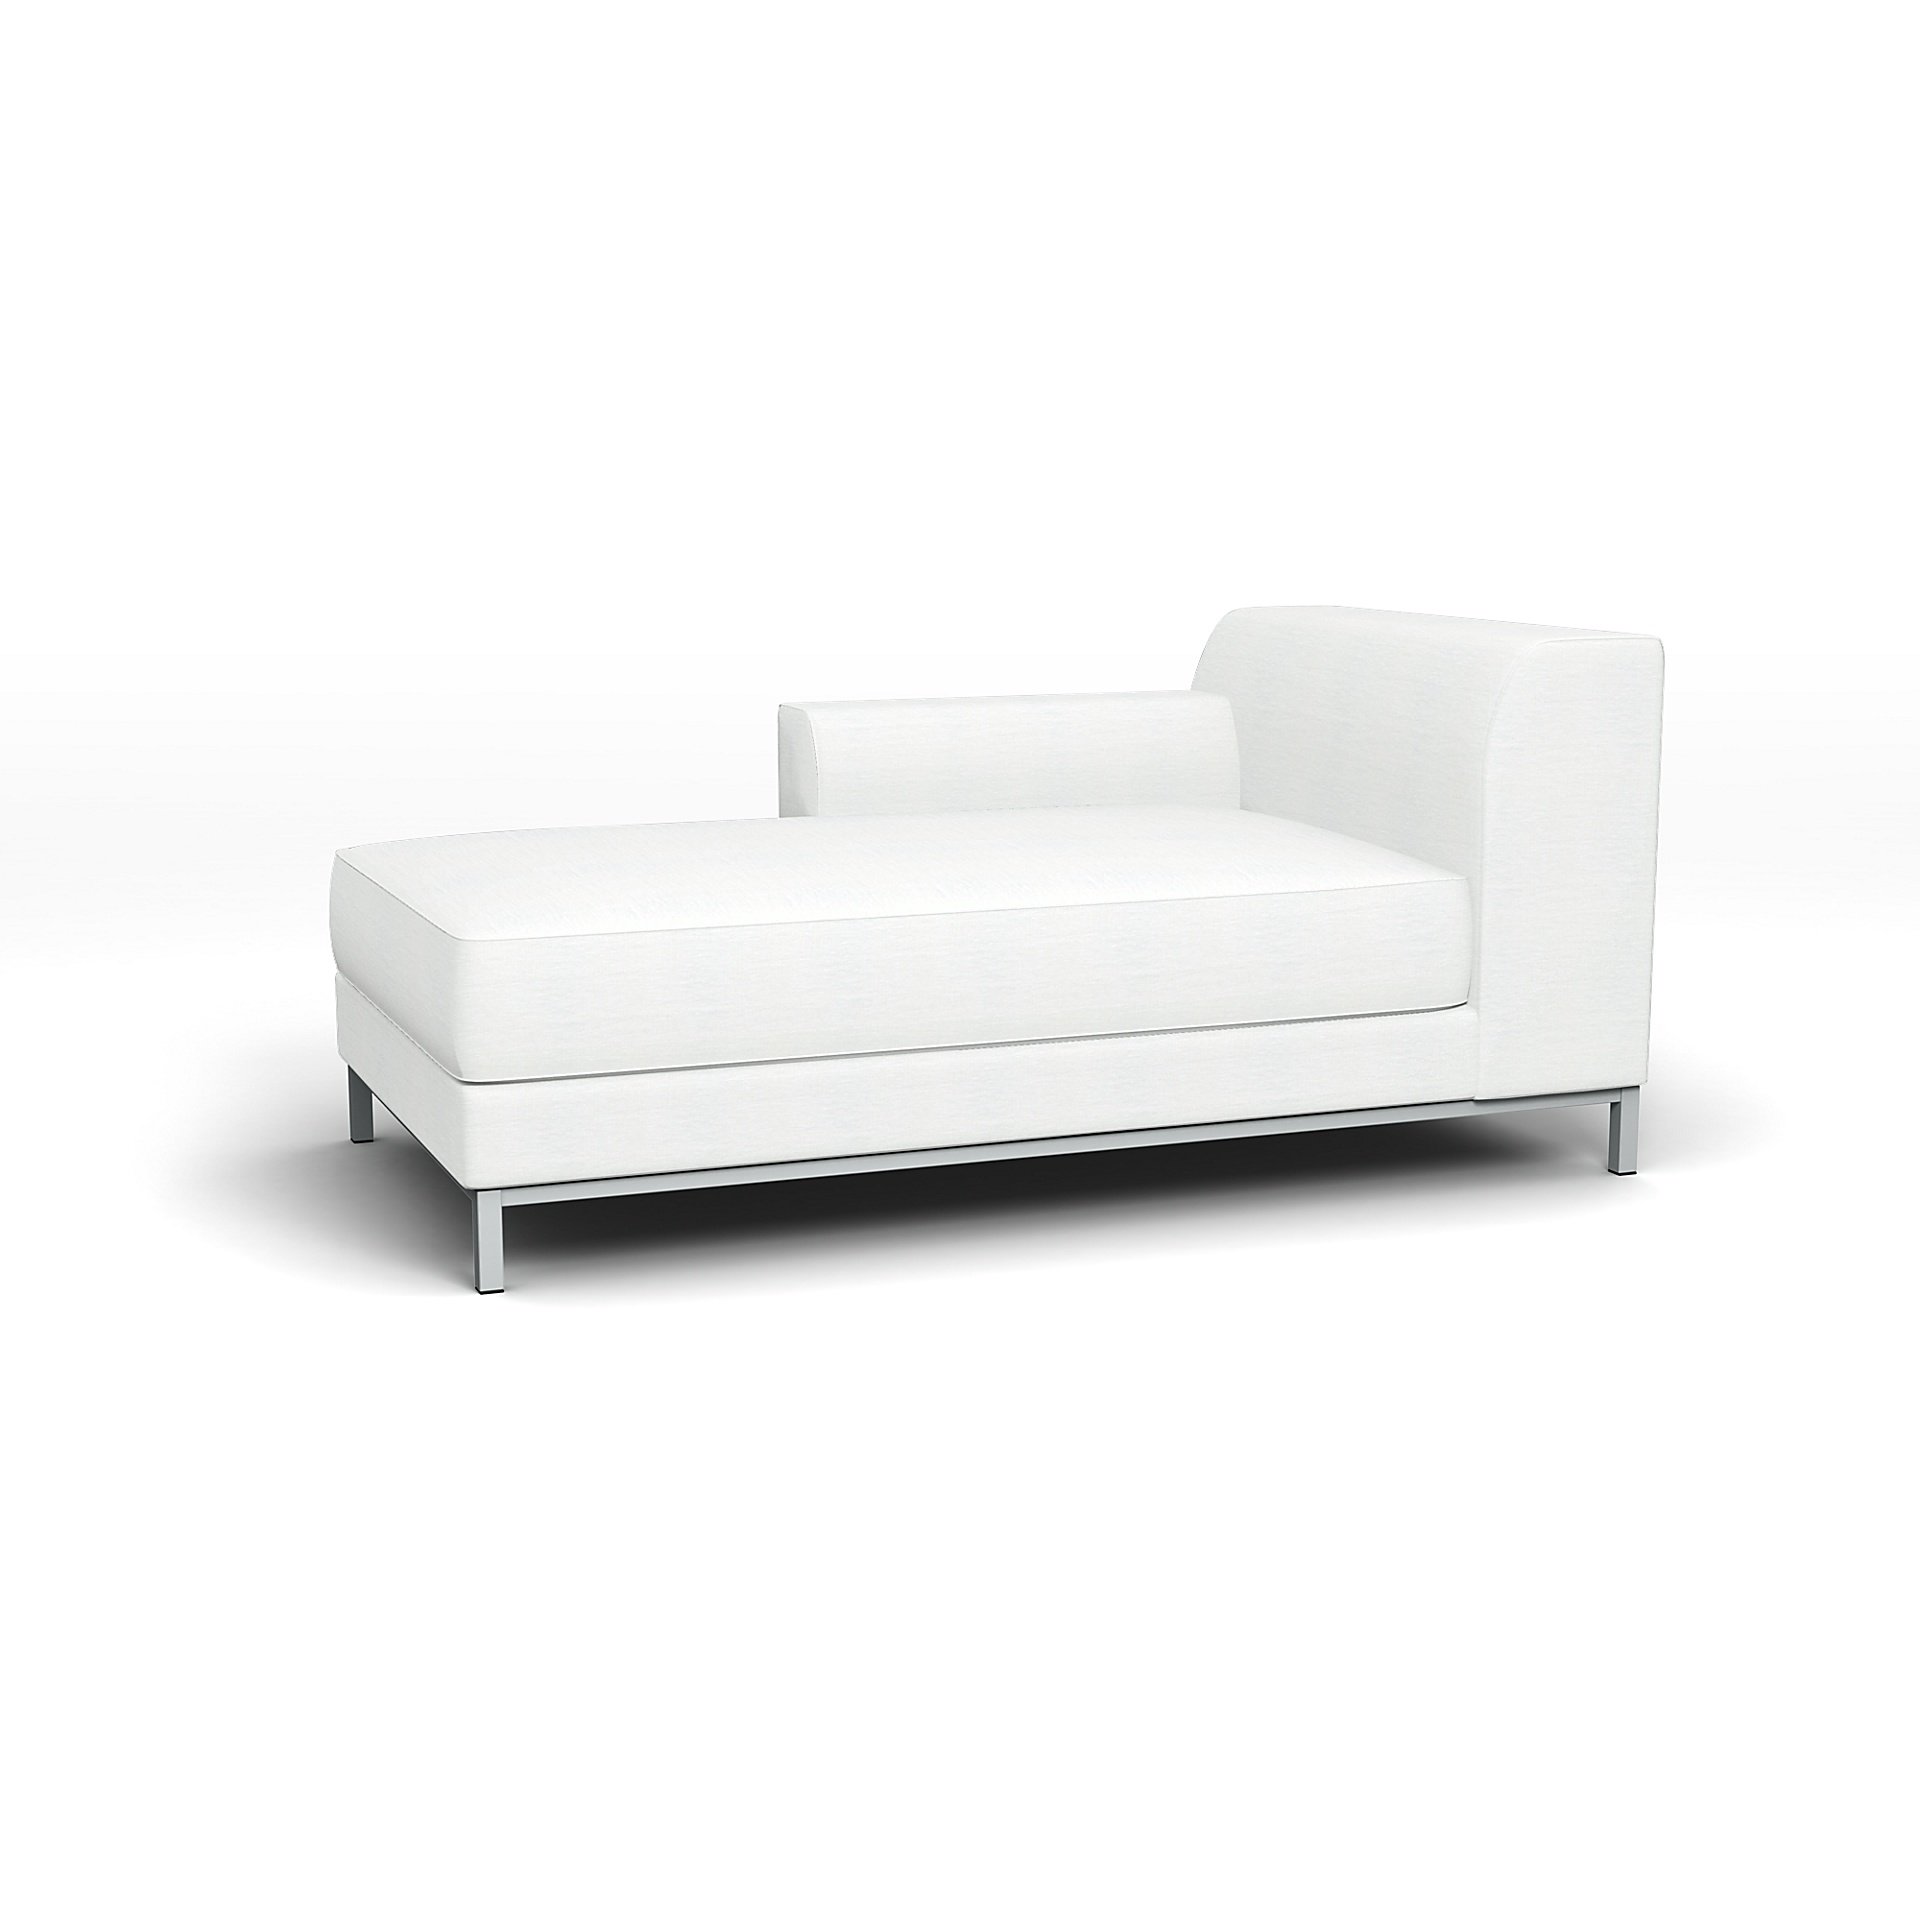 IKEA - Kramfors Chaise Longue with Left Arm Cover, White, Linen - Bemz